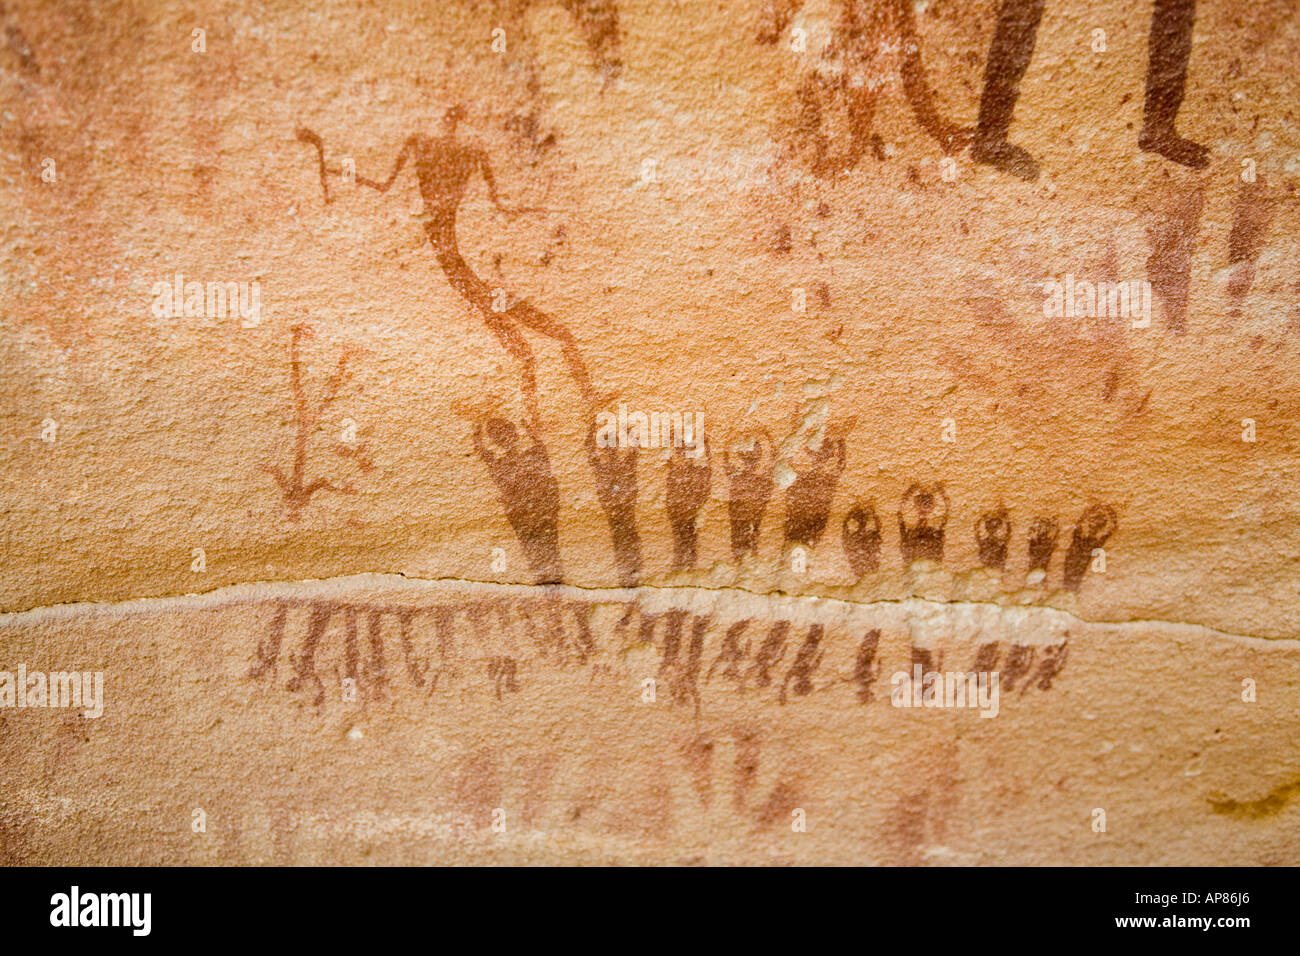 Line of dancing figures - Rock art, Mestekawi Cave, Gilf Kebir, Egypt's Western desert. Stock Photo